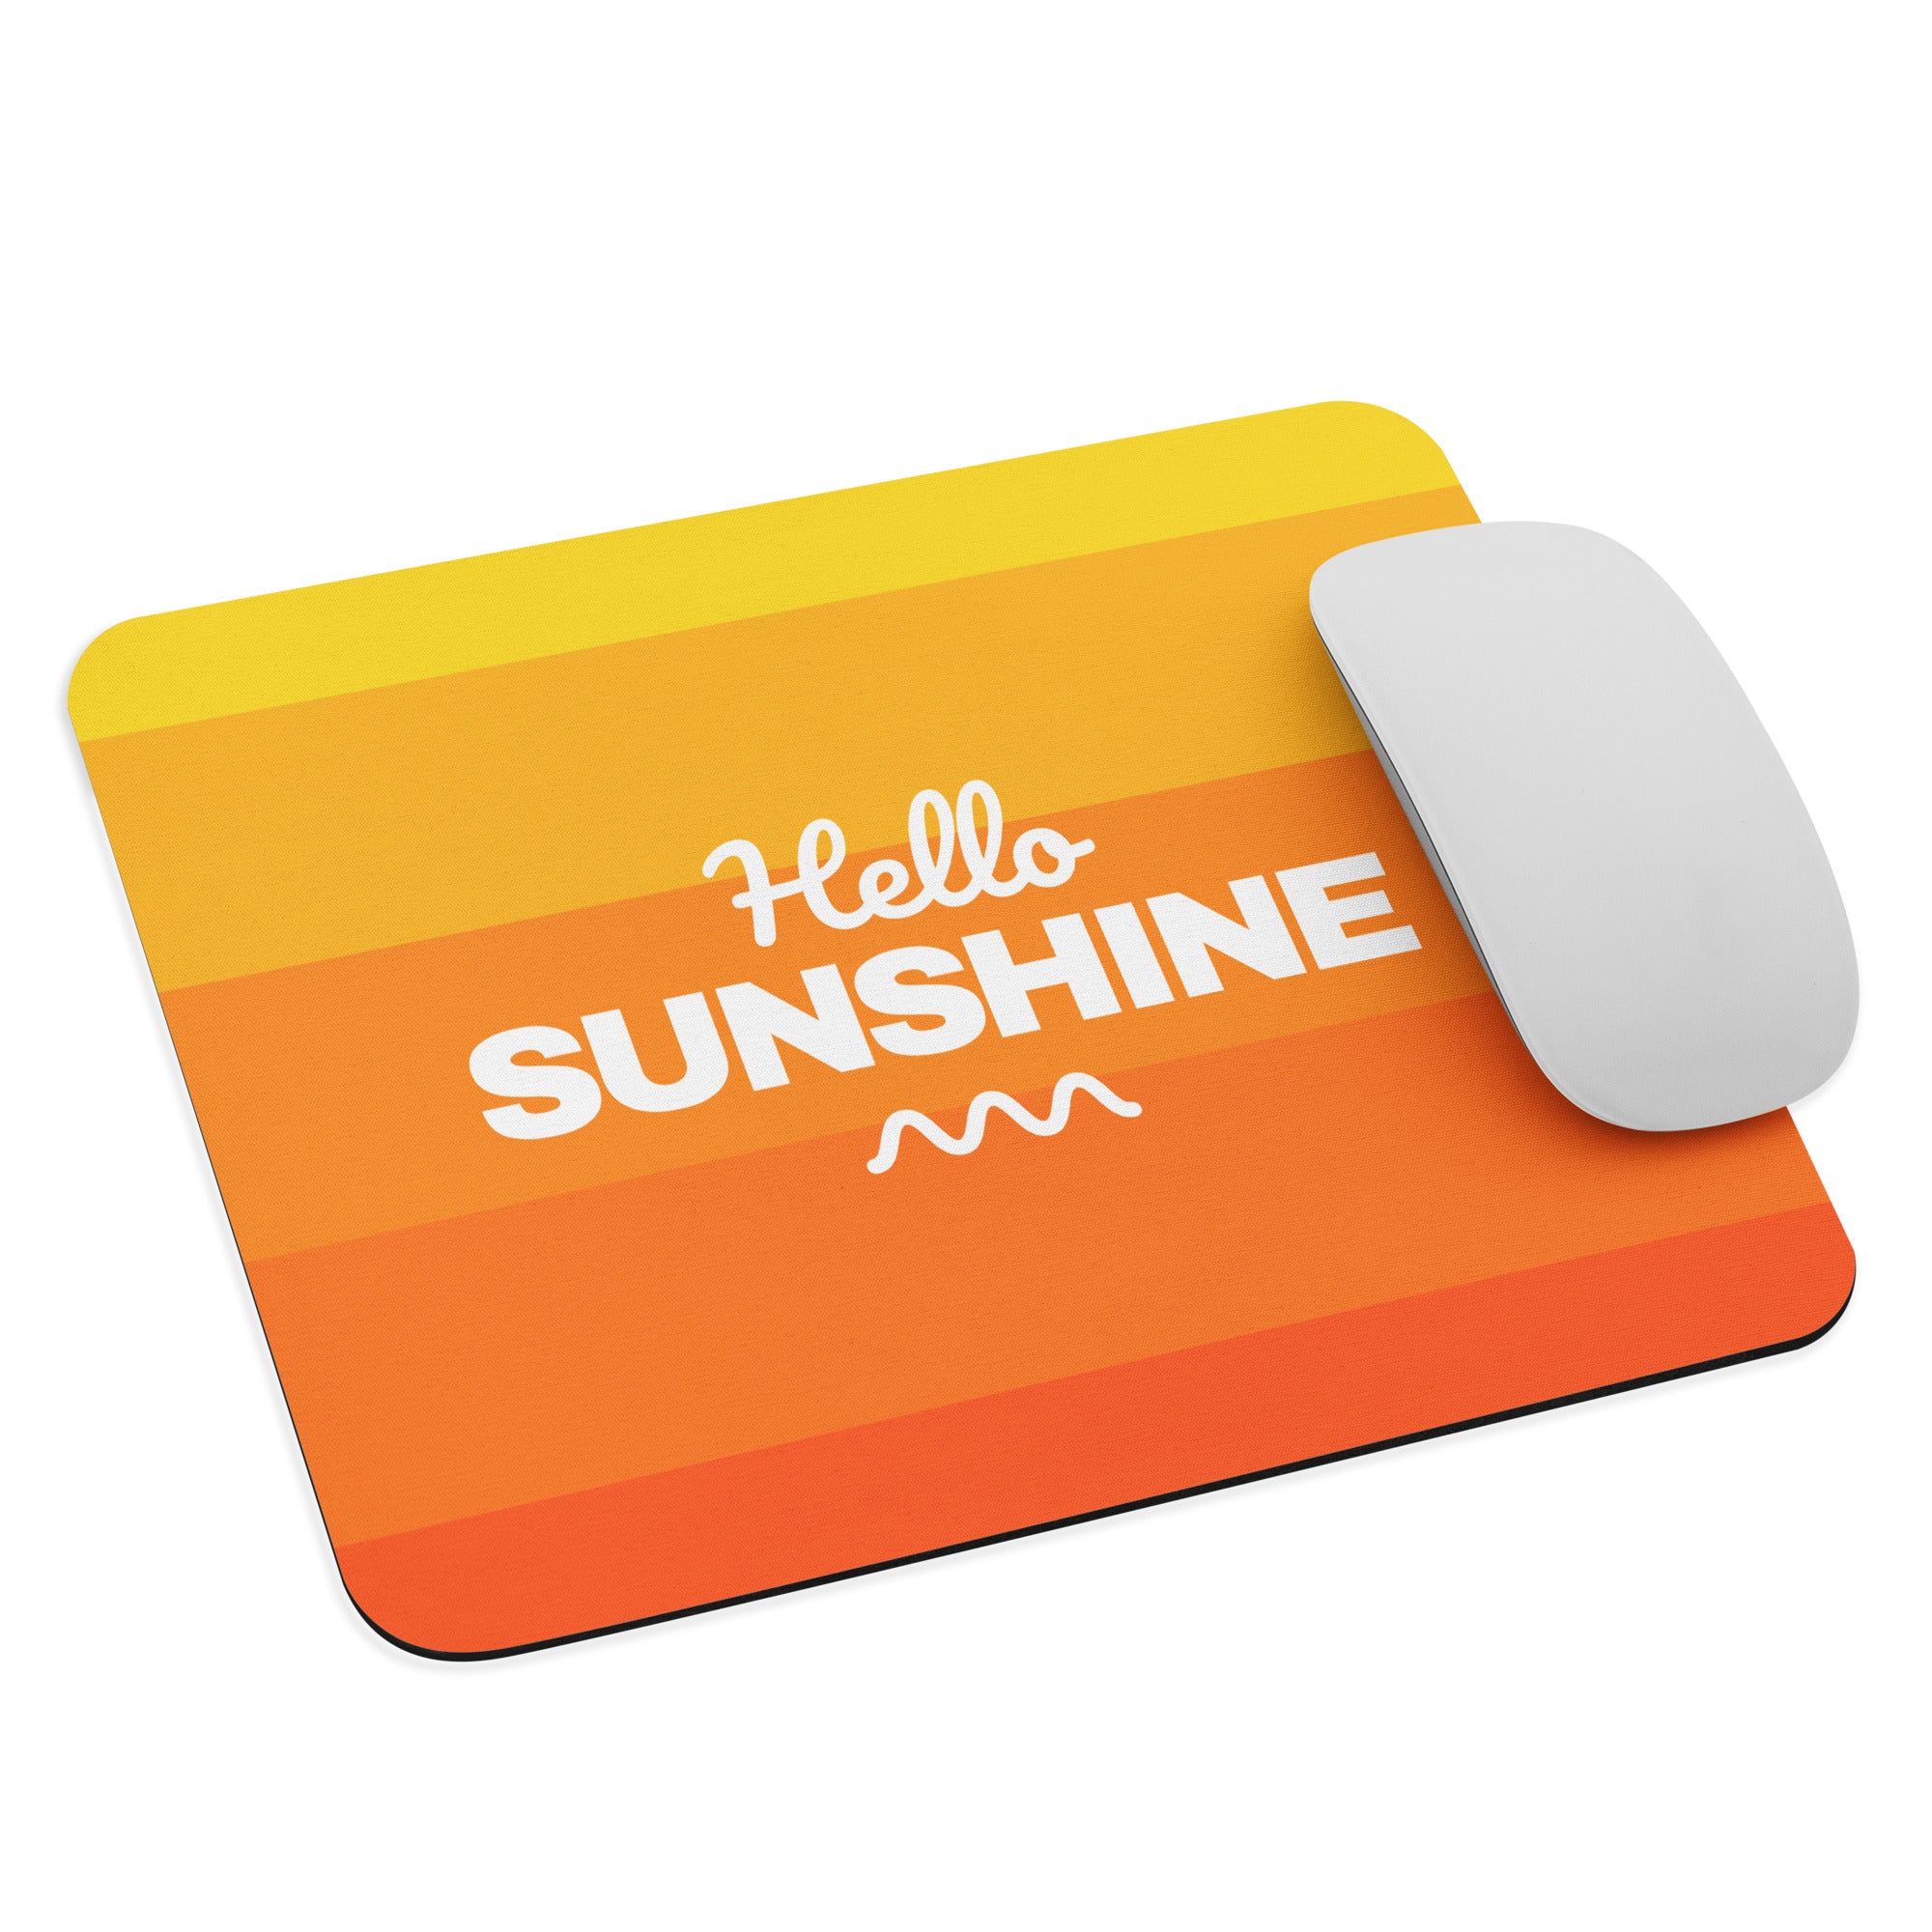 Hello Sunshine - Mouse Pad